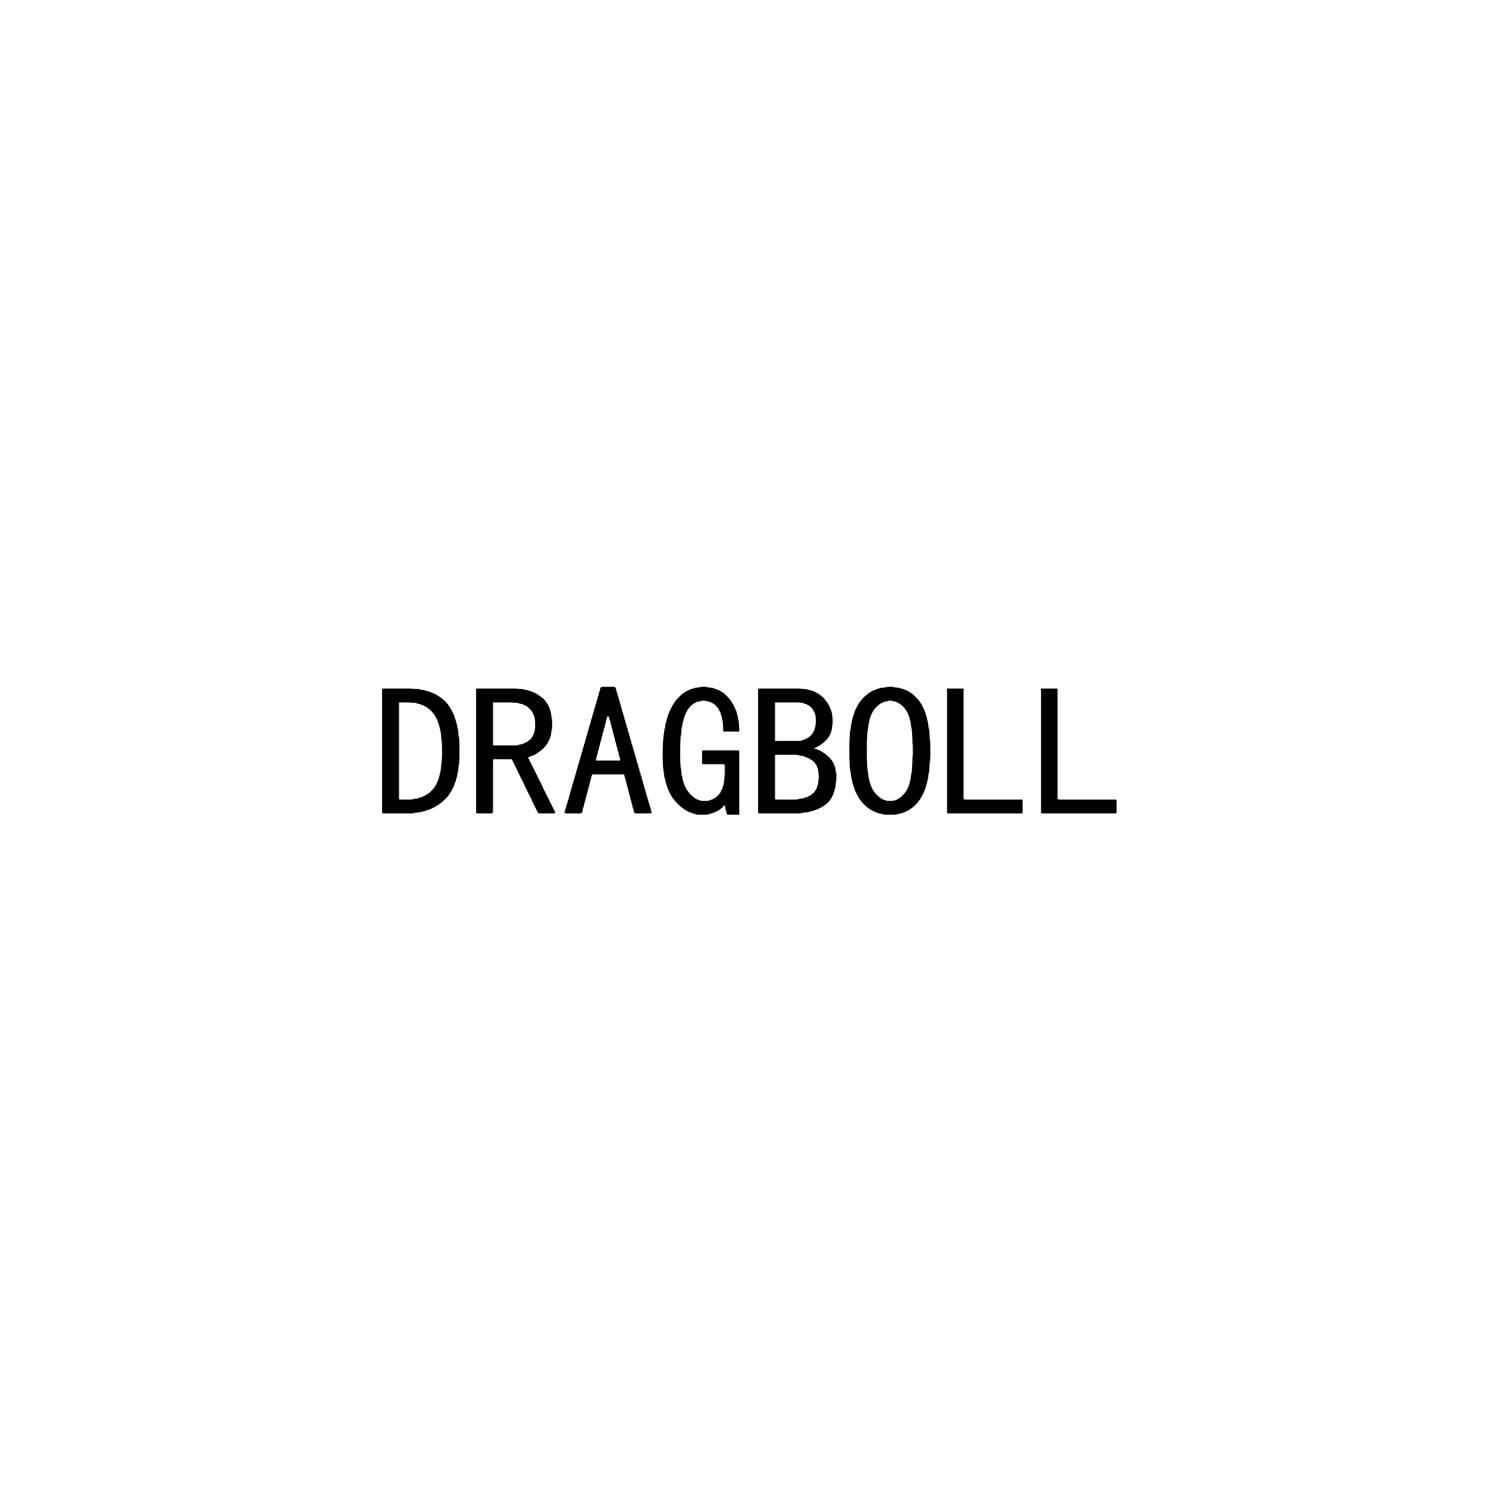 28类-健身玩具DRAGBOLL商标转让